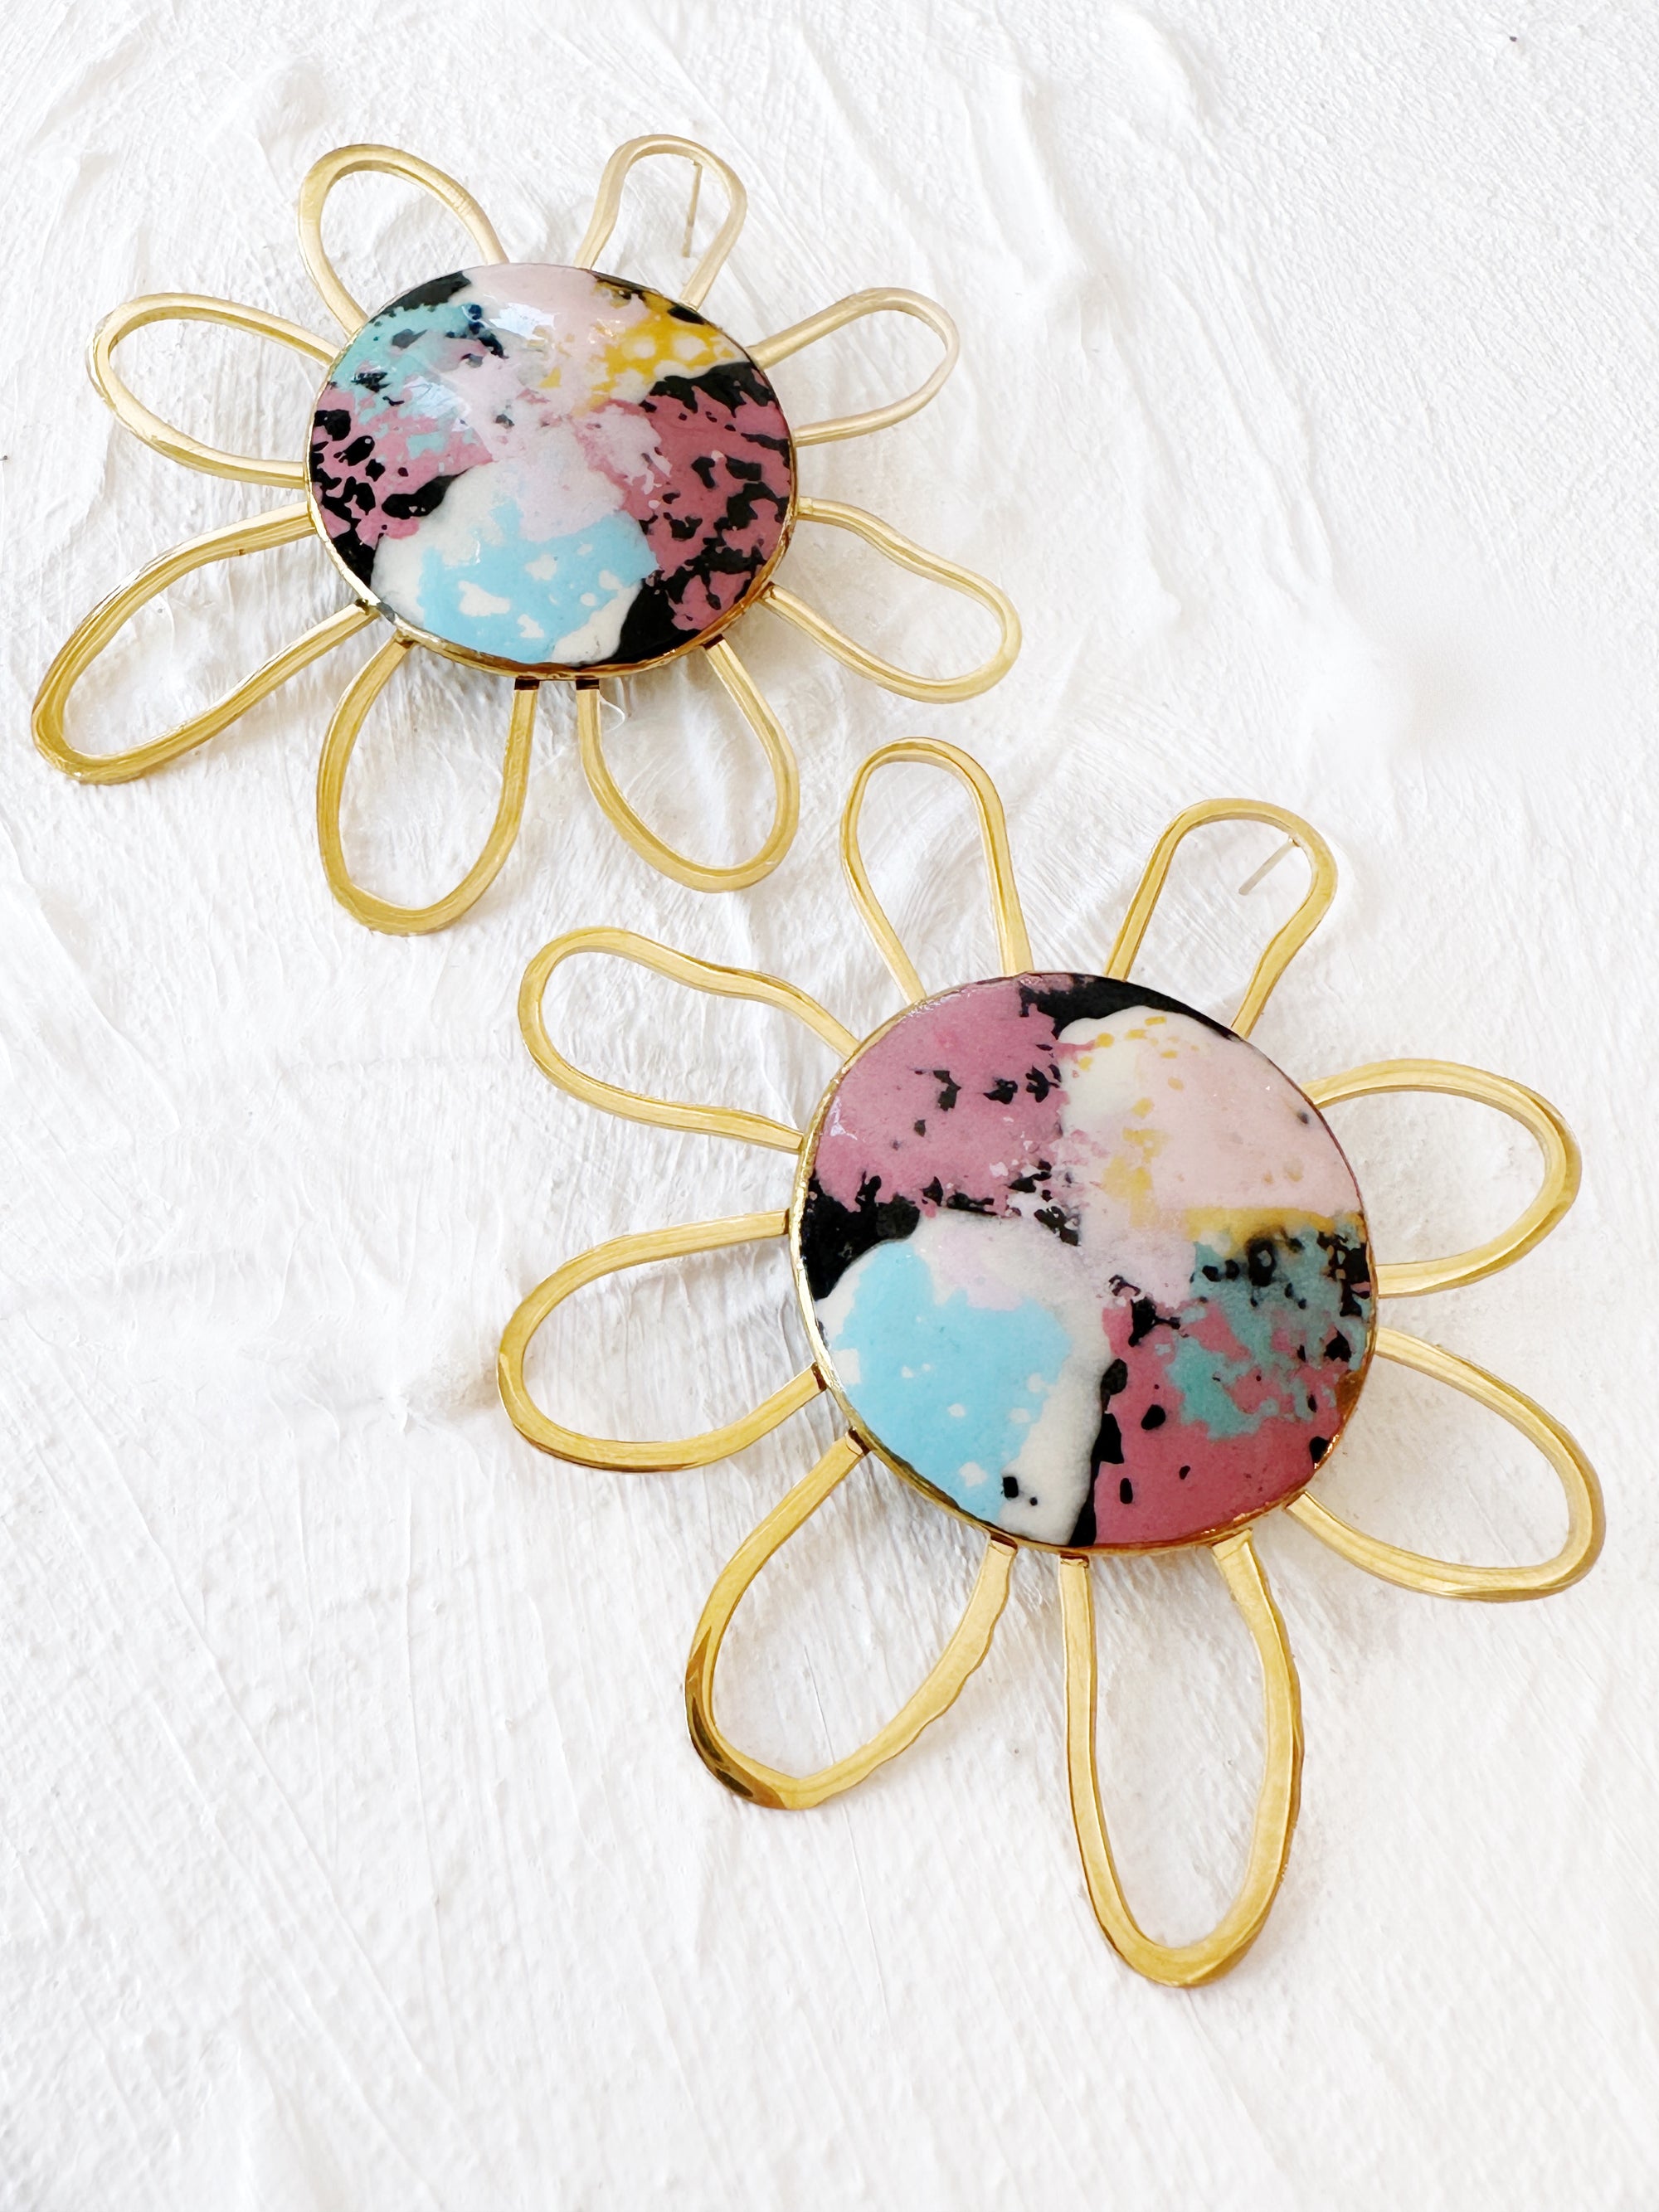 Twine and Love Earrings, Pink Gold Handmade Lightweight Custom Earrings